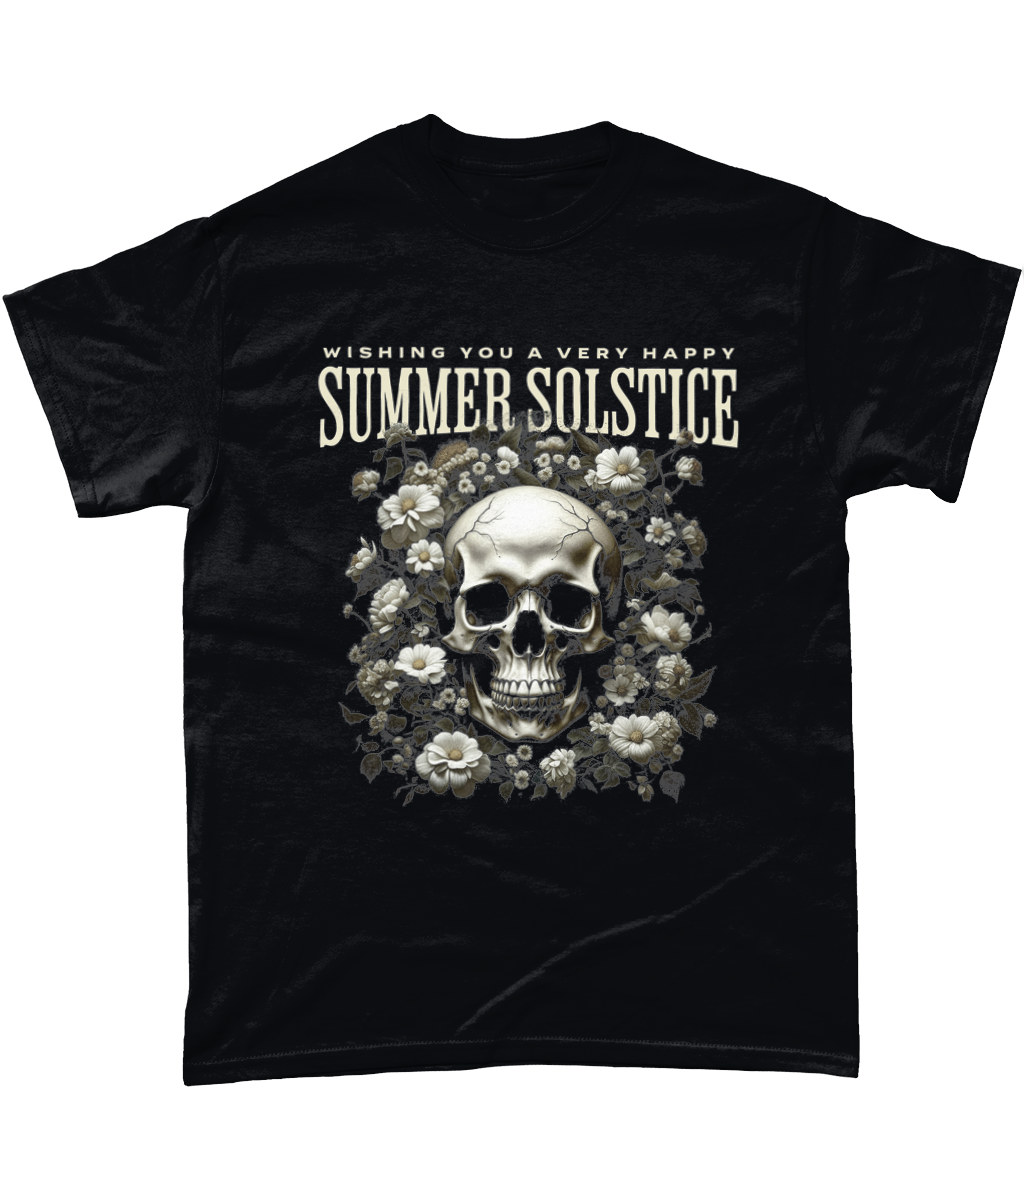 Summer Solstice Skull Tee - Mystical Midsummer Nights Top, 100% Cotton, S-5XL